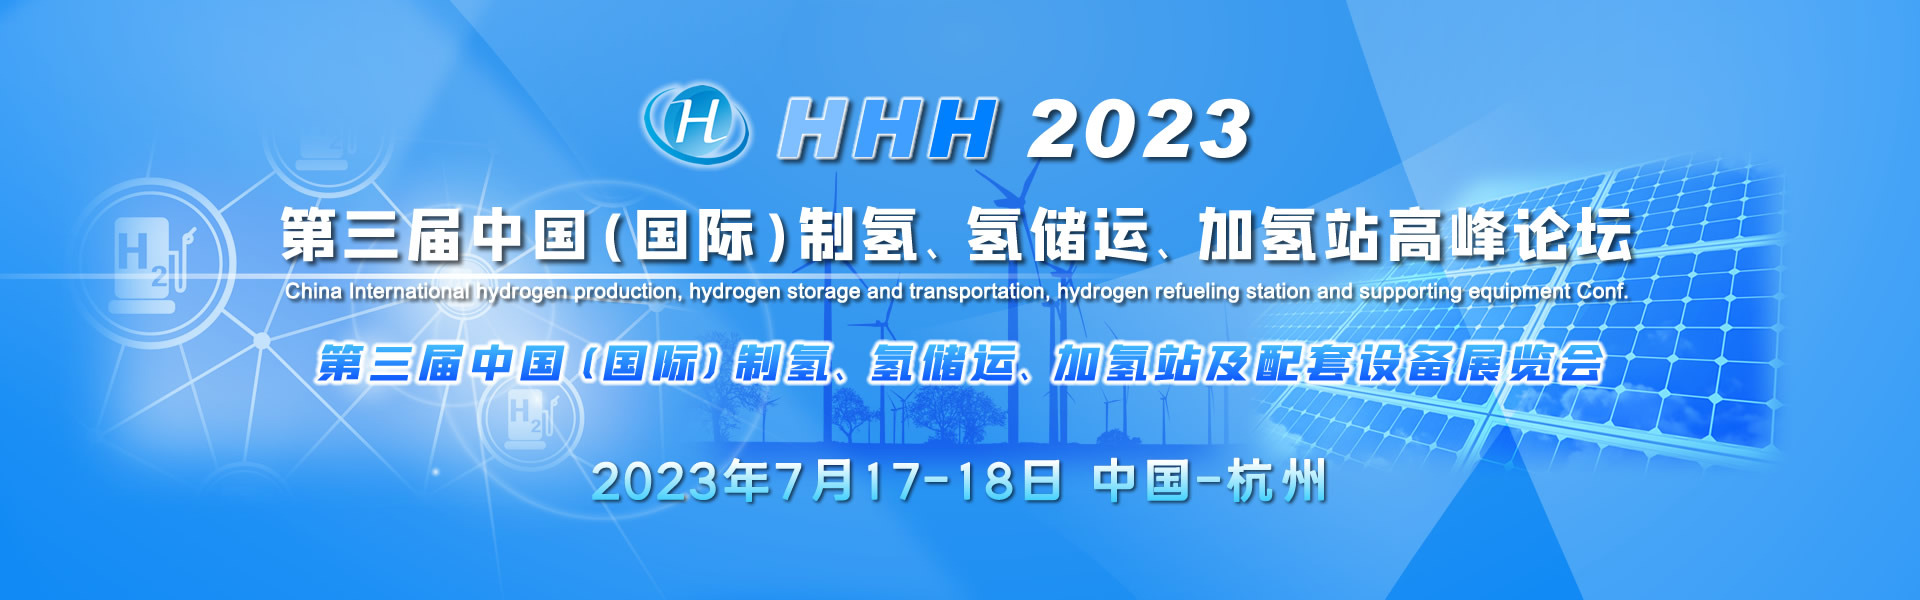 HHH2023 第三届中国（国际）制氢、氢储运、加氢站及配套设备大会暨展览会